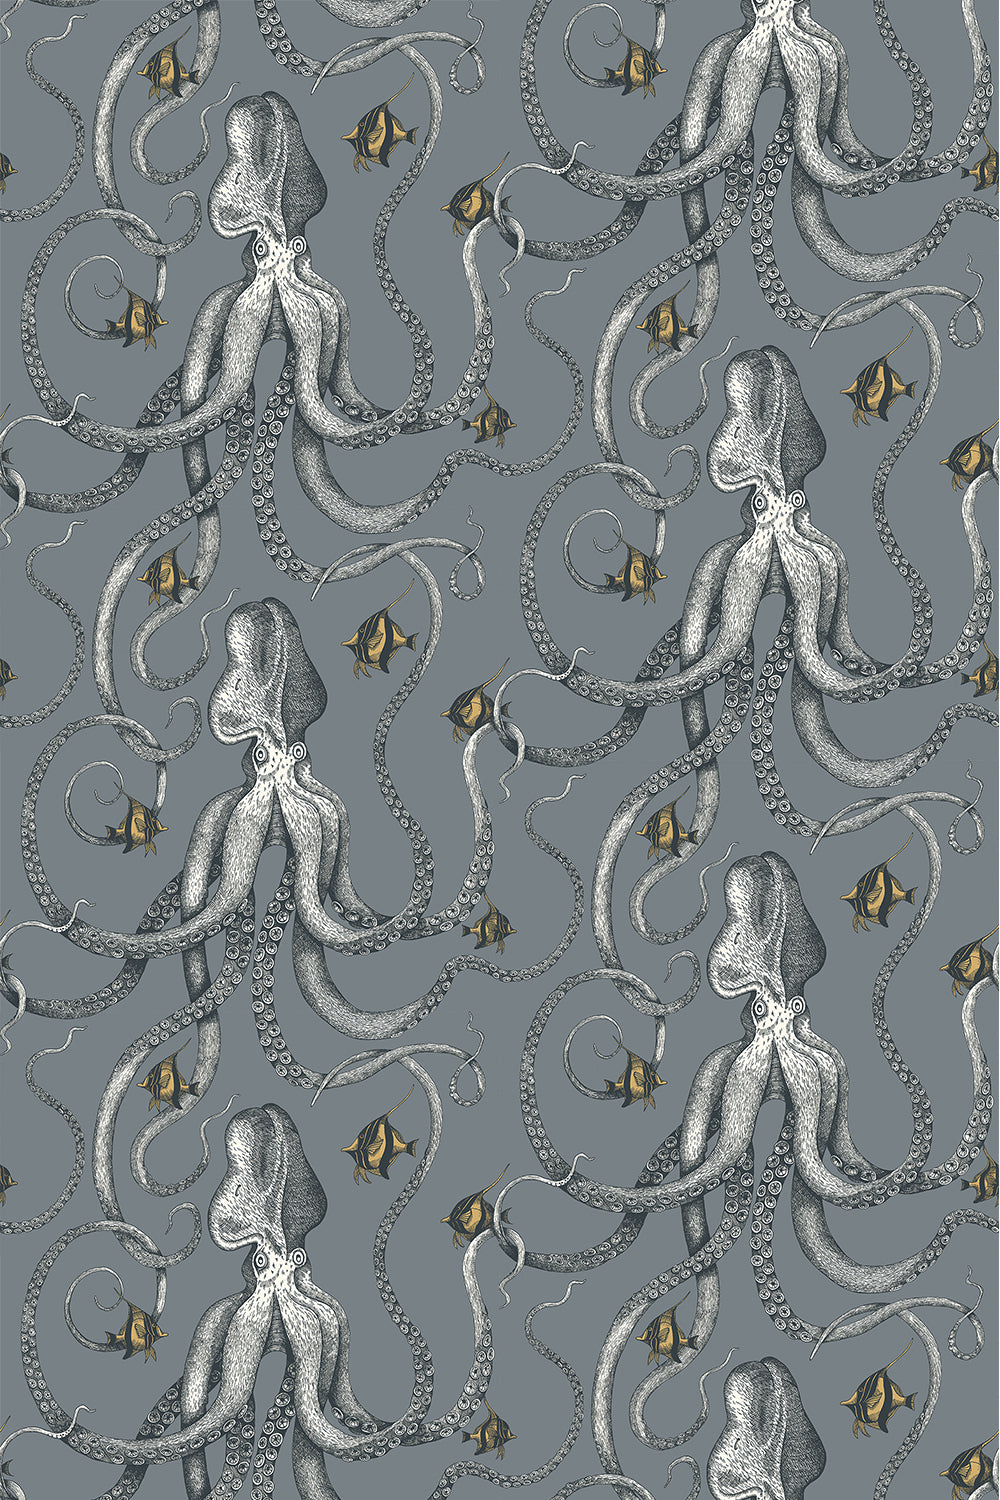 josephine-munsey-wallpaper-Octopoda-Bude-Blue-underwater-octopus-fish-print-illustrated-wallpaper-hand-drawn-British-designer-new-colour-Bude-blue